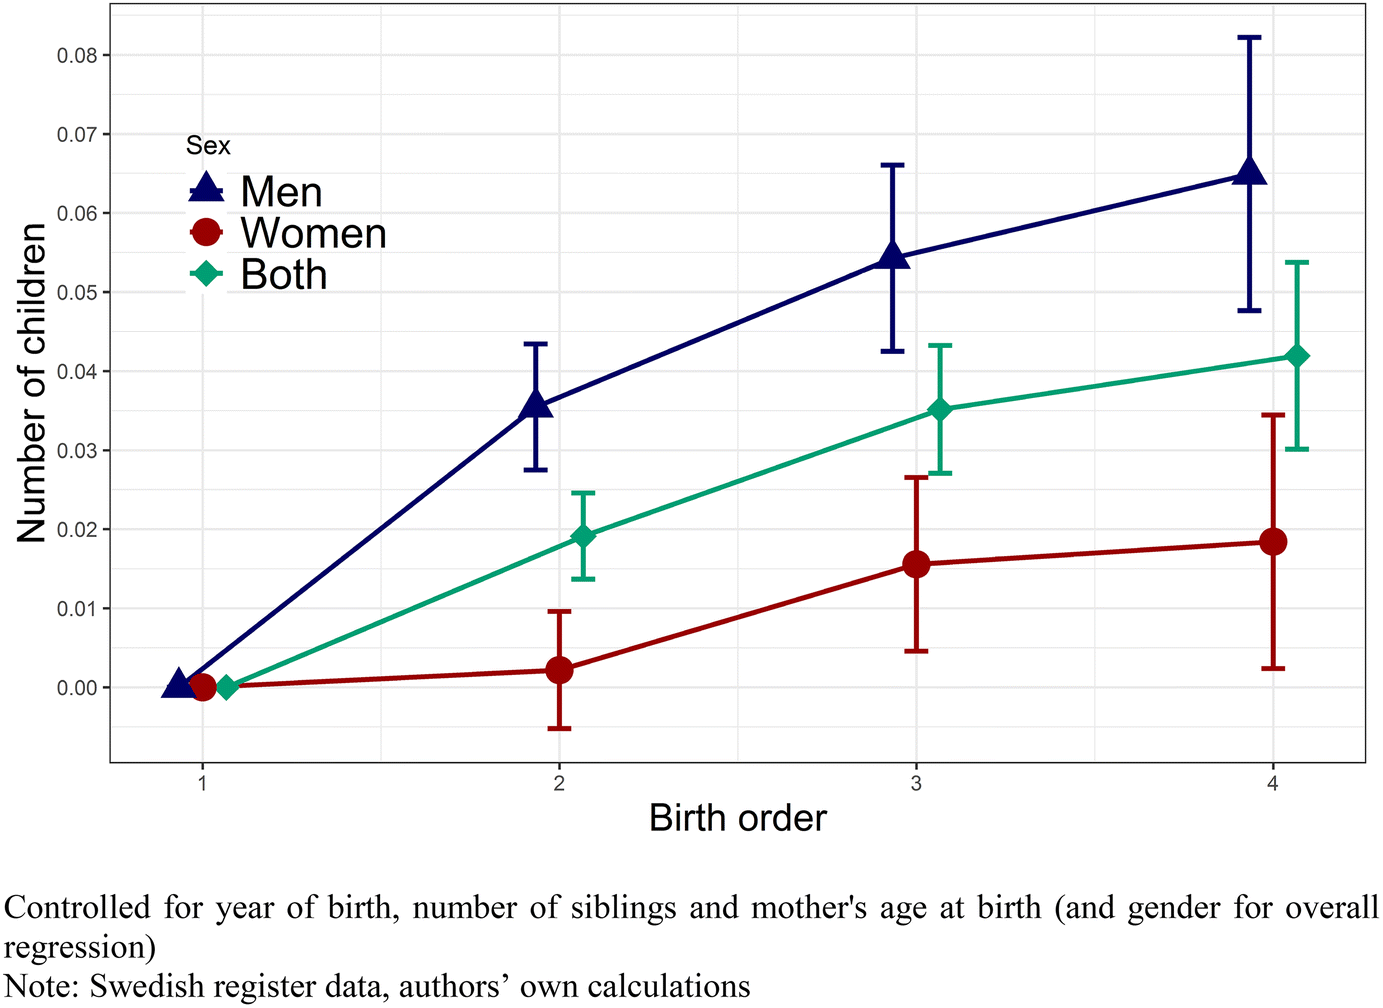 Adler Birth Order Theory Chart